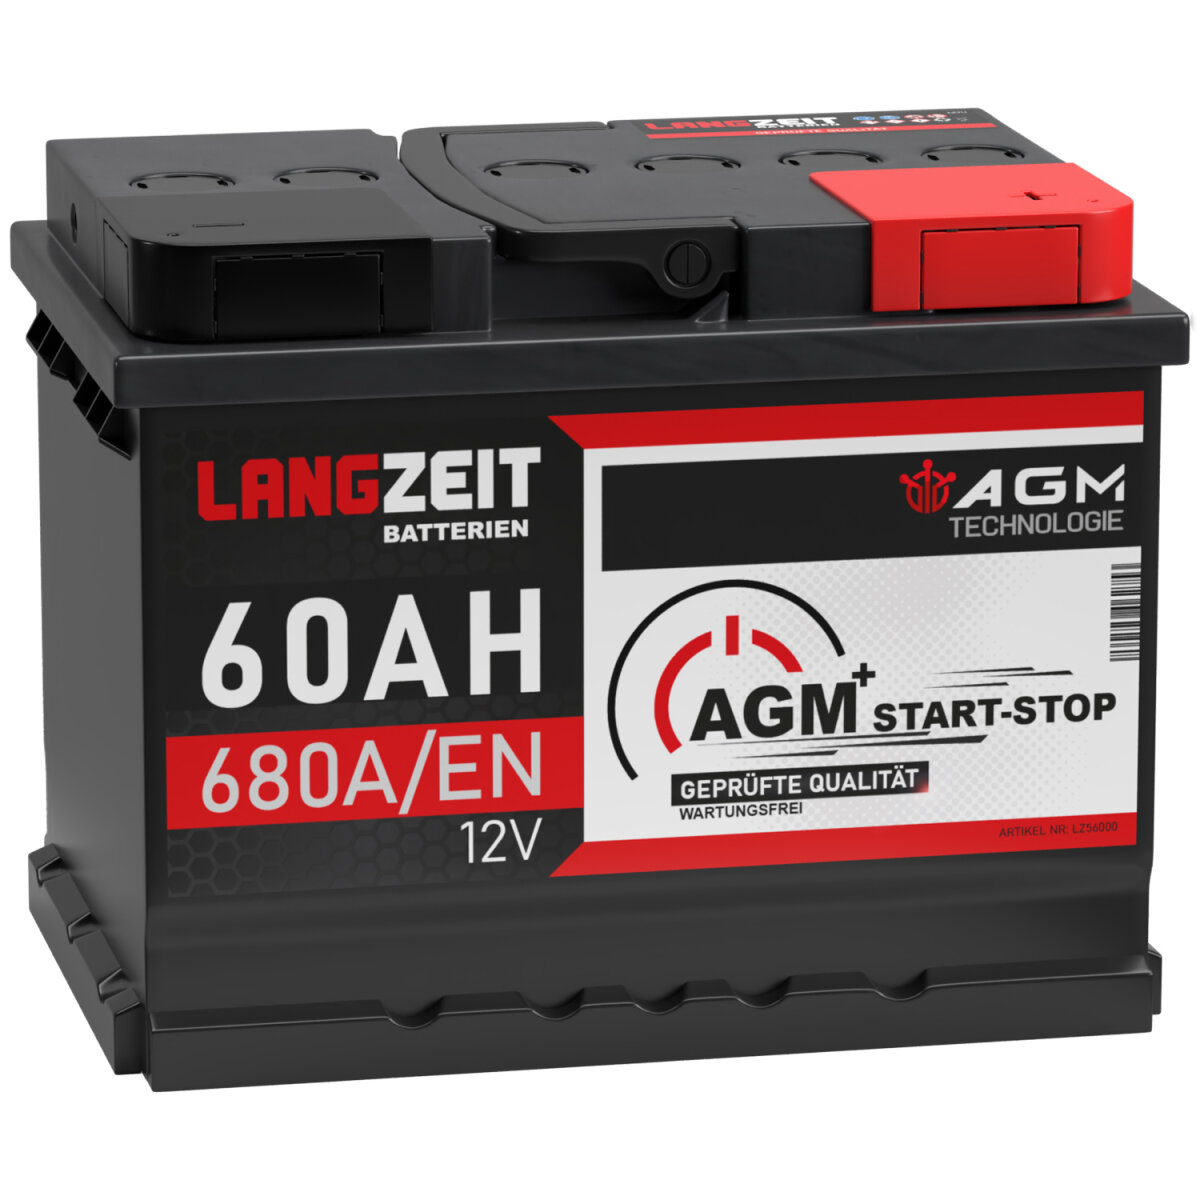 https://www.winnerbatterien.de/media/image/product/8051/lg/langzeit-agm-batterie-60ah-12v.jpg